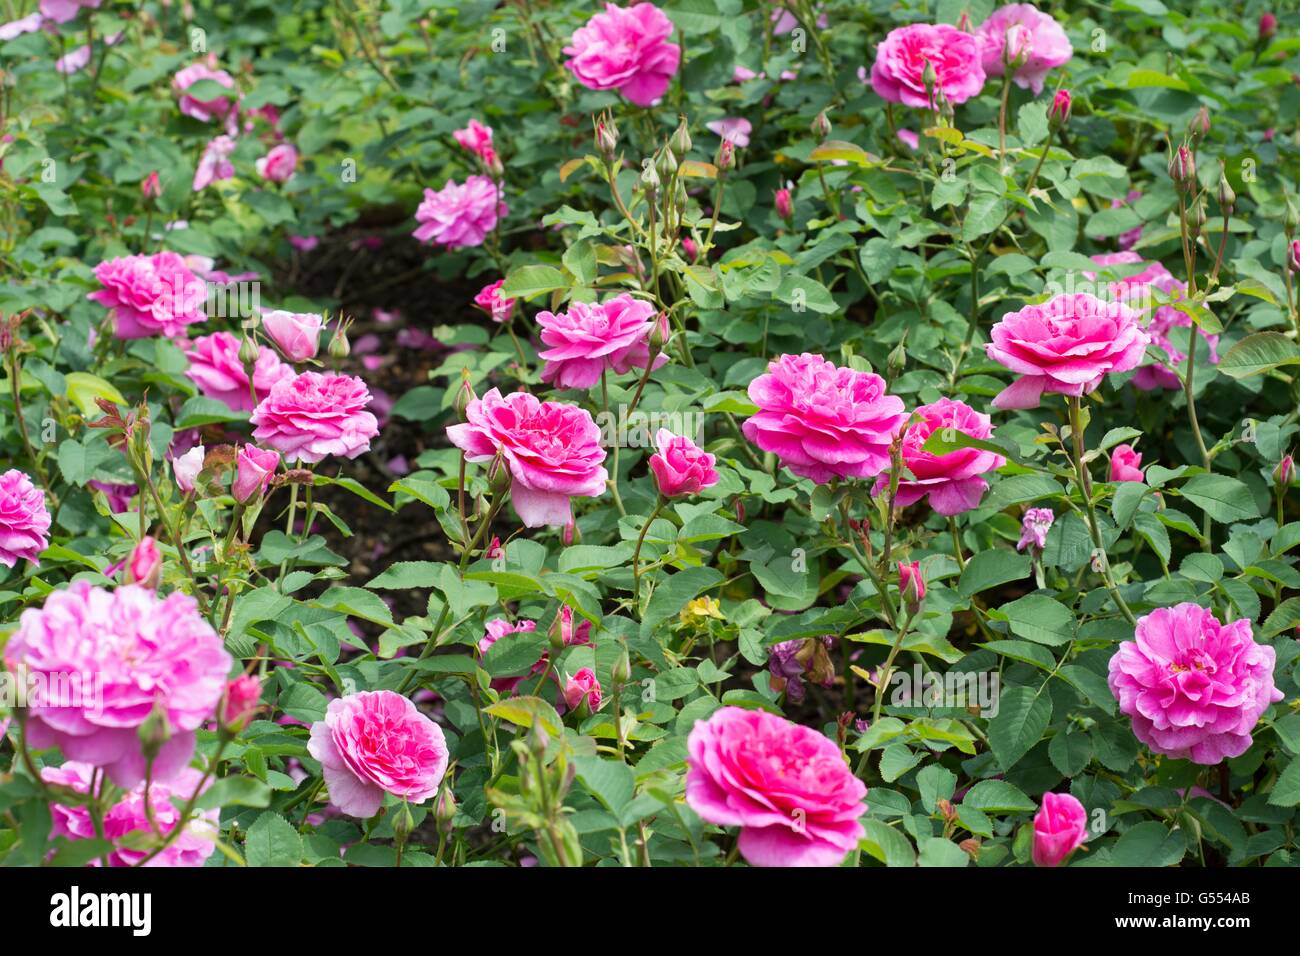 ENGLAND'S ROSE, English Rose - bred by David Austin, Shrub Rose Stock Photo  - Alamy